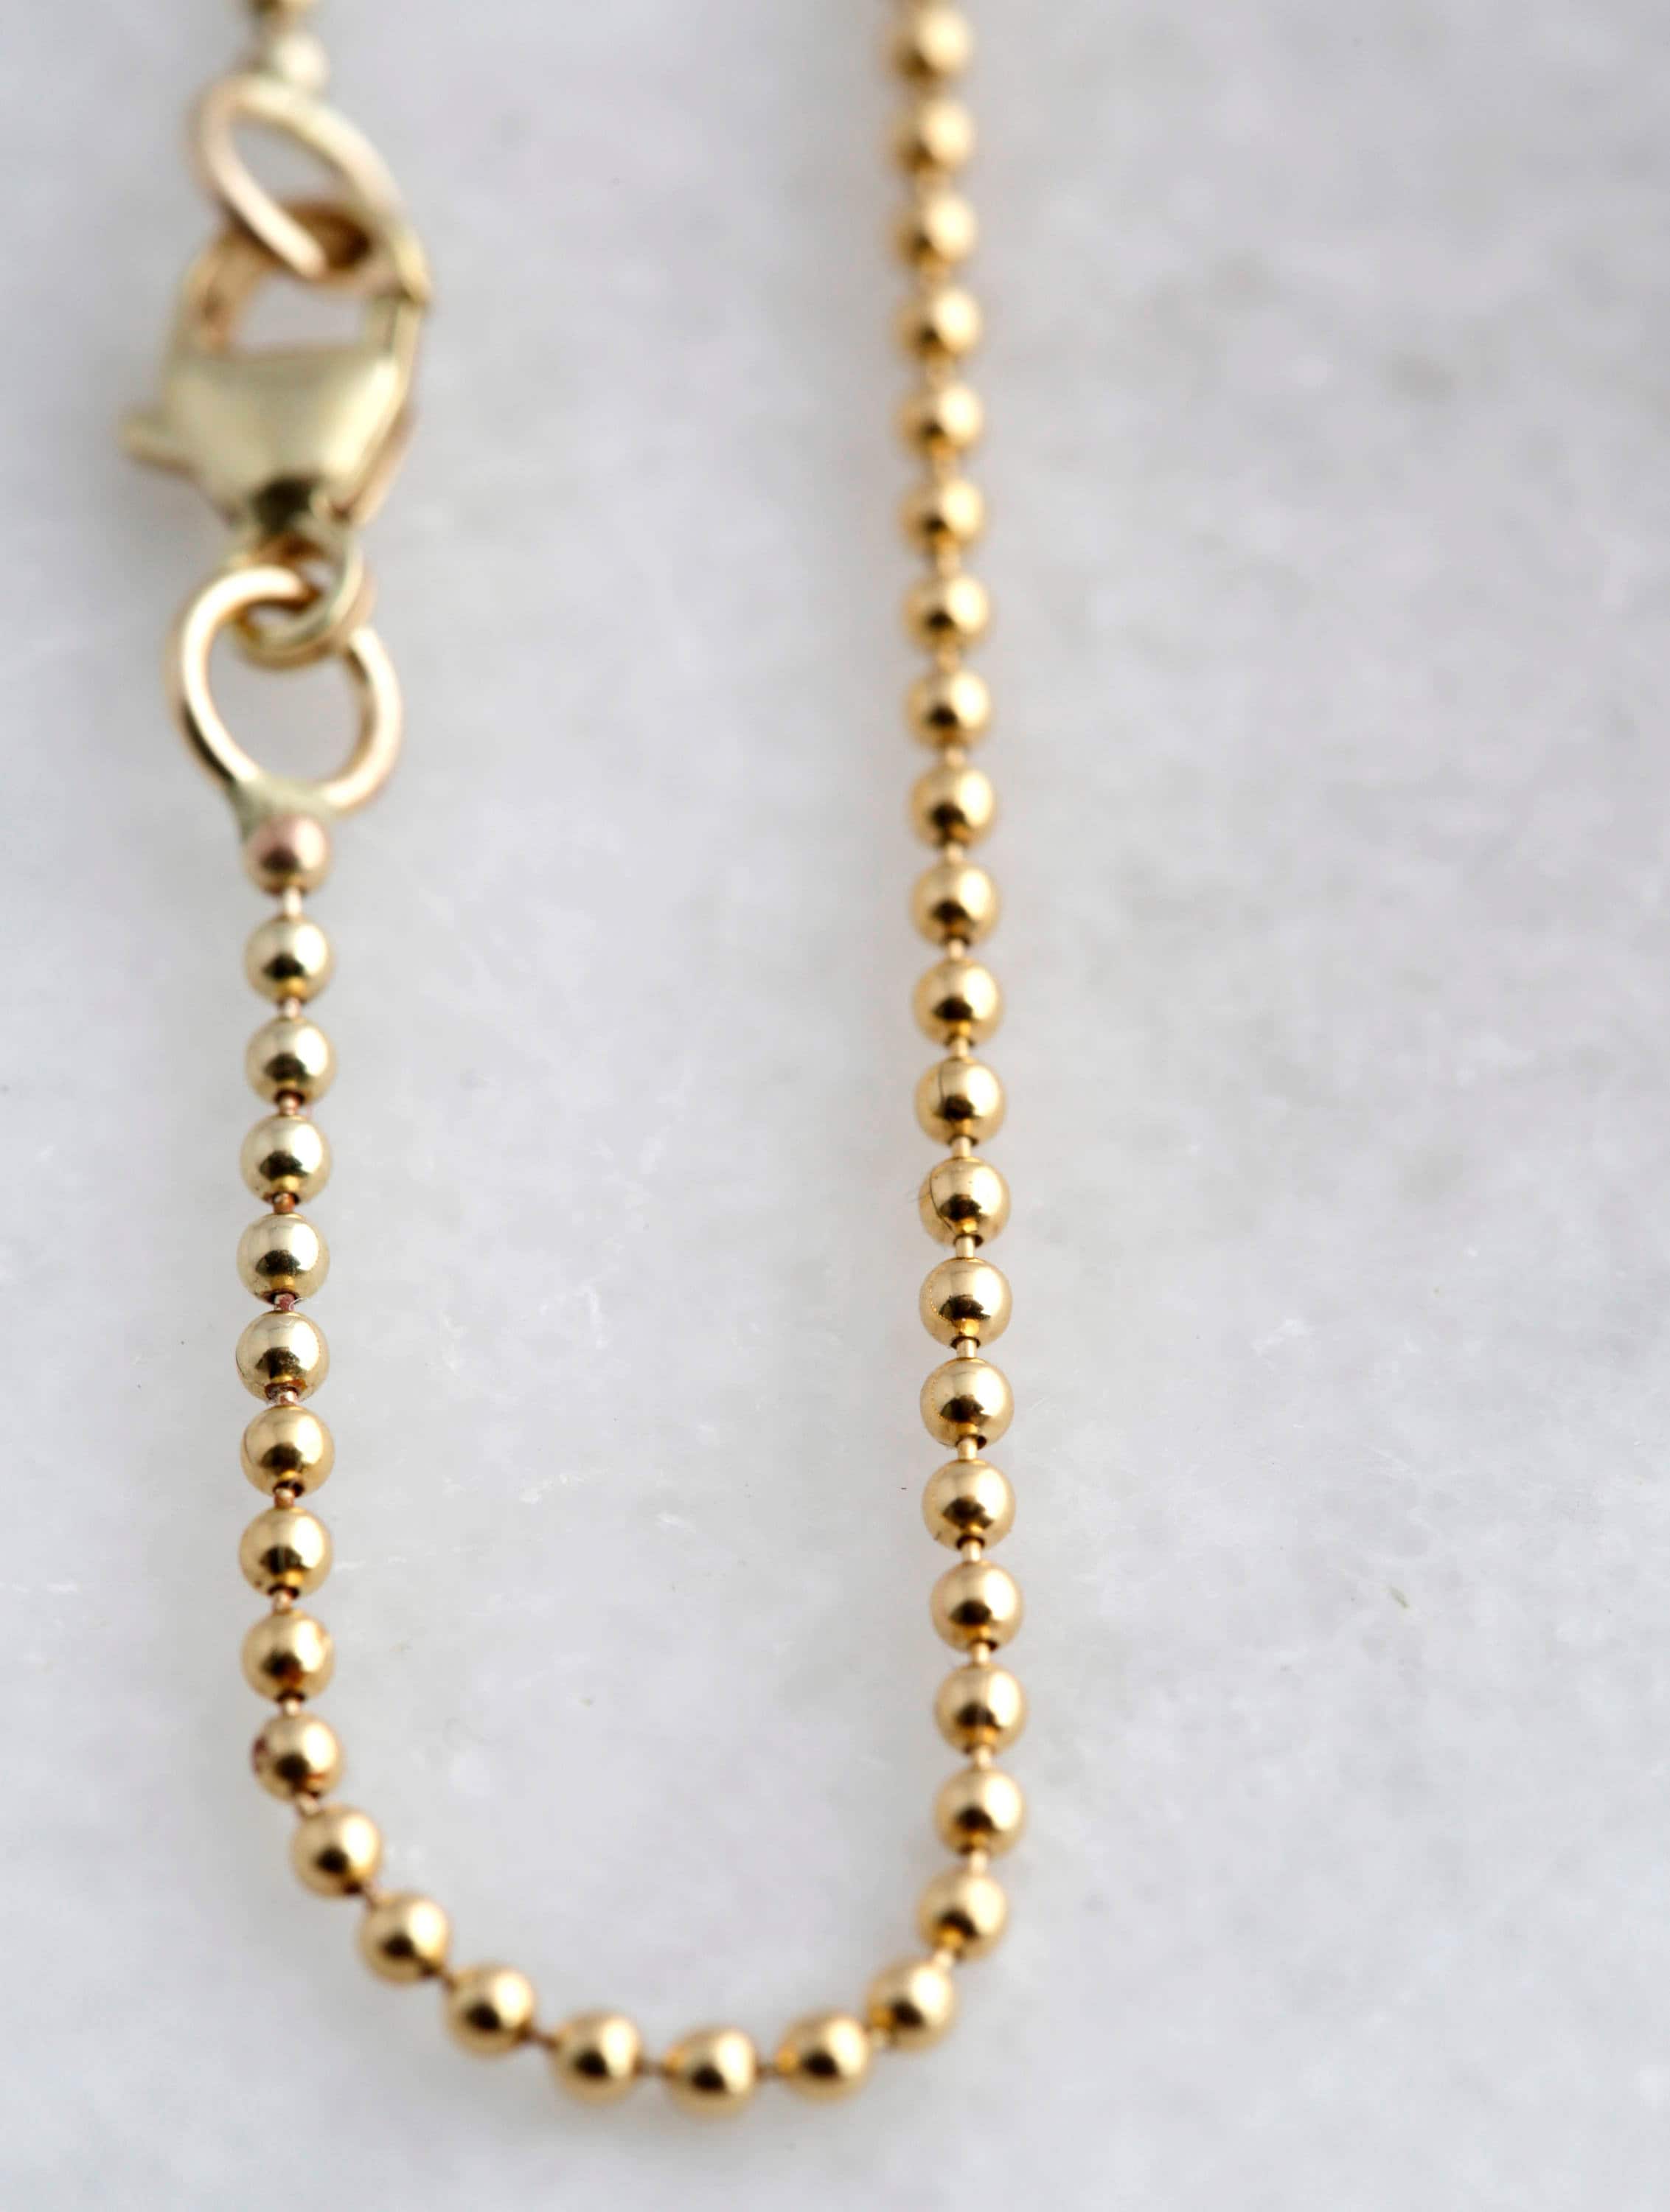 14K Gold 1.5mm Ball Bead Chain, 20